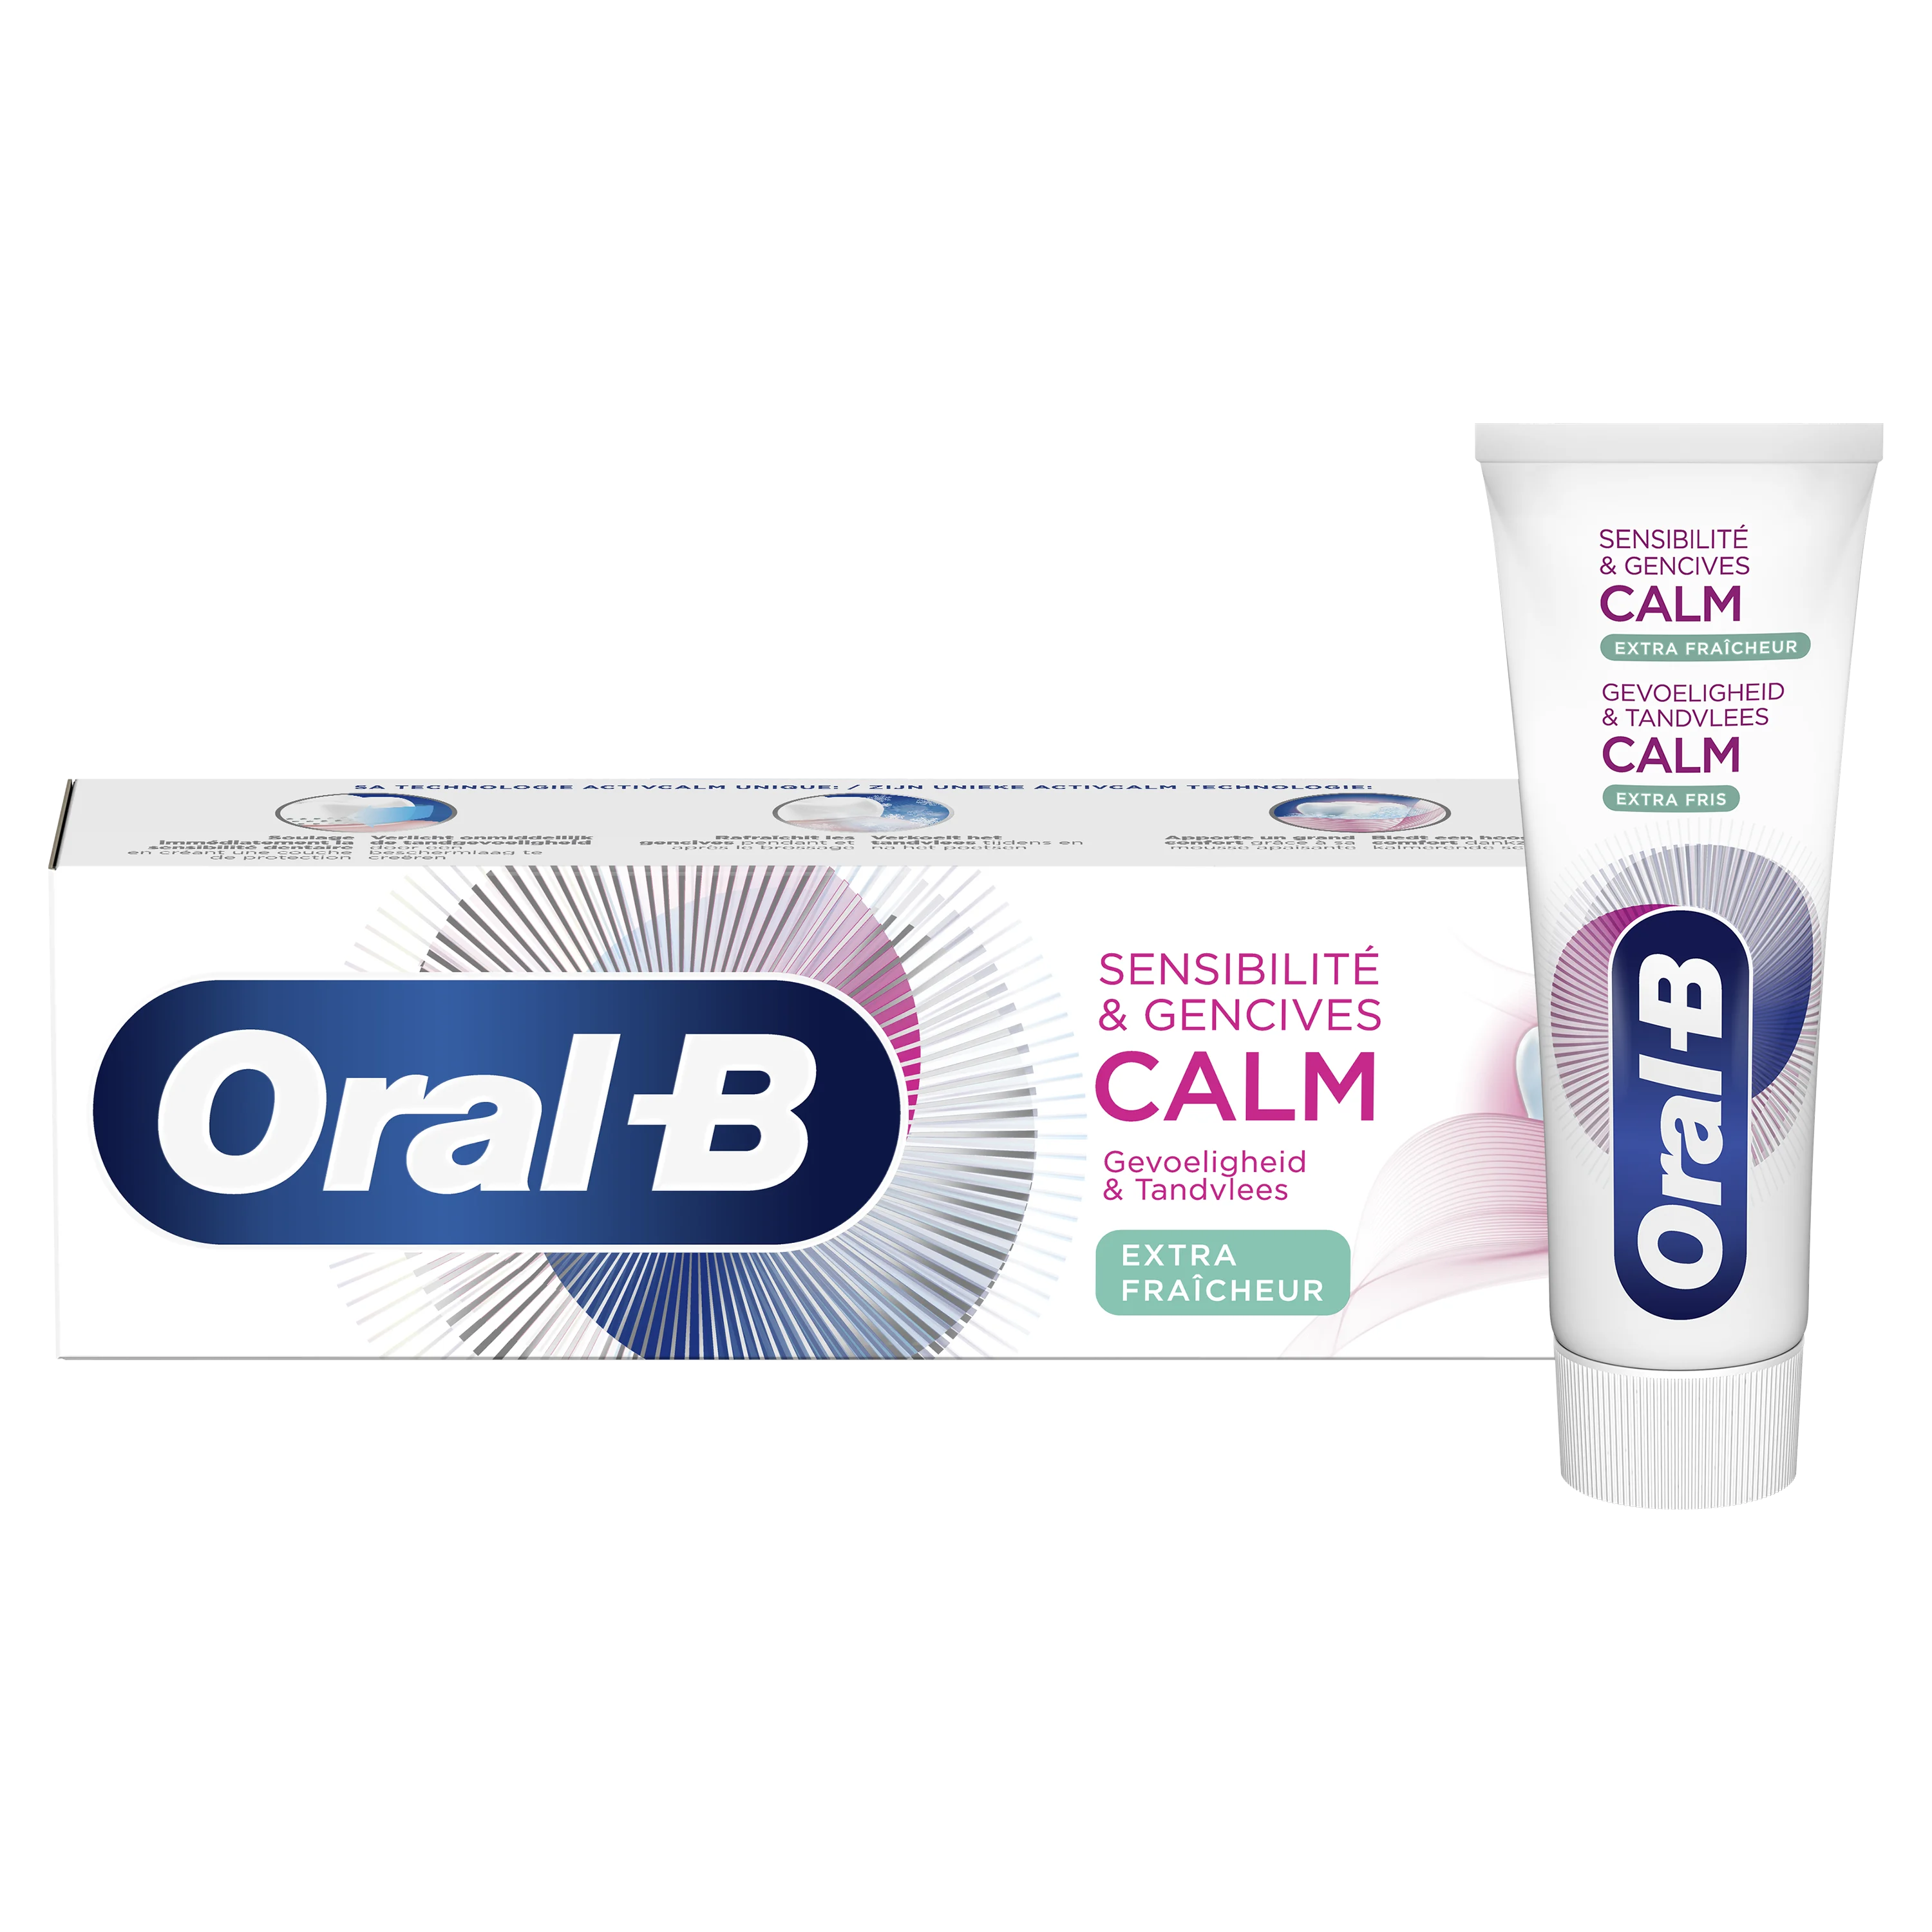 Oral-B Sensibilité & Gencives Calm Extra Fraîcheur Dentifrice undefined